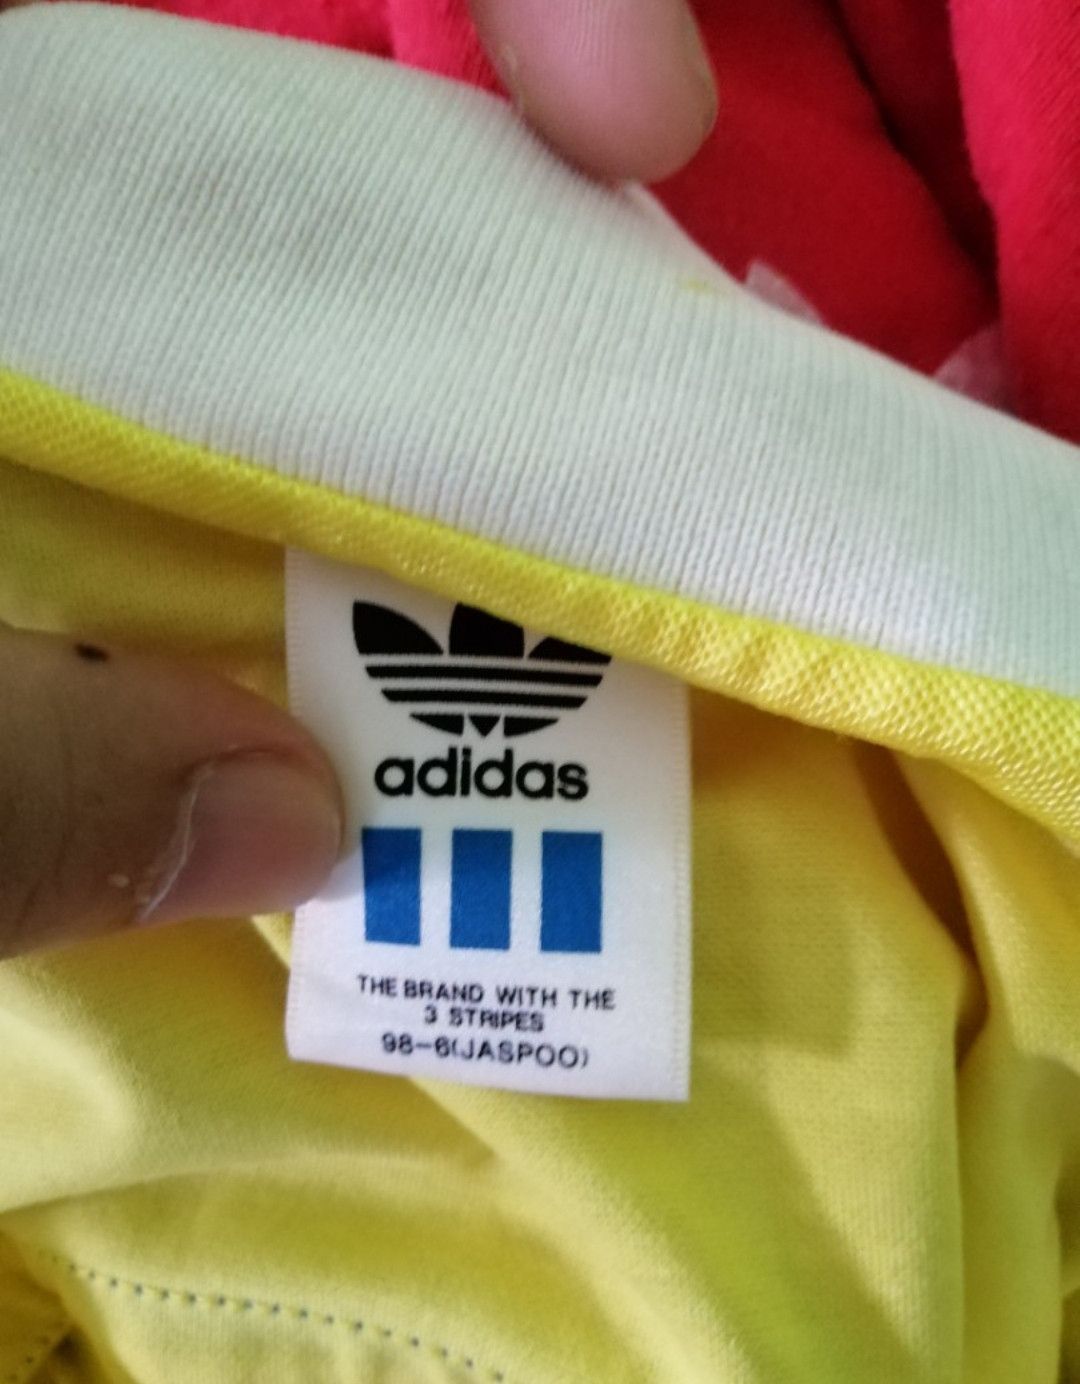 Adidas Adidas jaspo jersey Size US L / EU 52-54 / 3 - 3 Preview